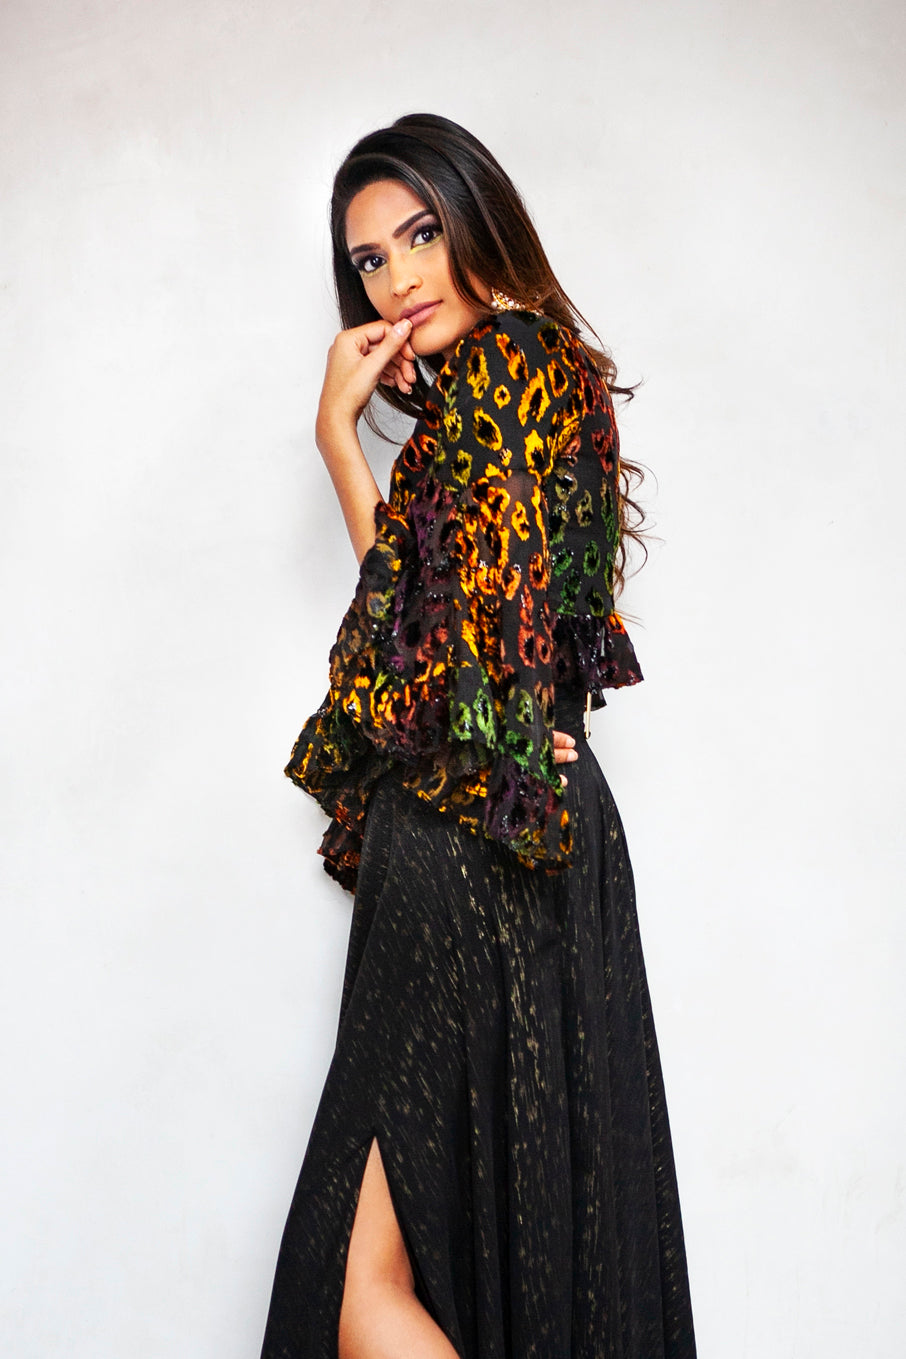 SEEMA Ruffled Leopard Burnout Top - Side View - Harleen Kaur - Modern Indian Womenswear